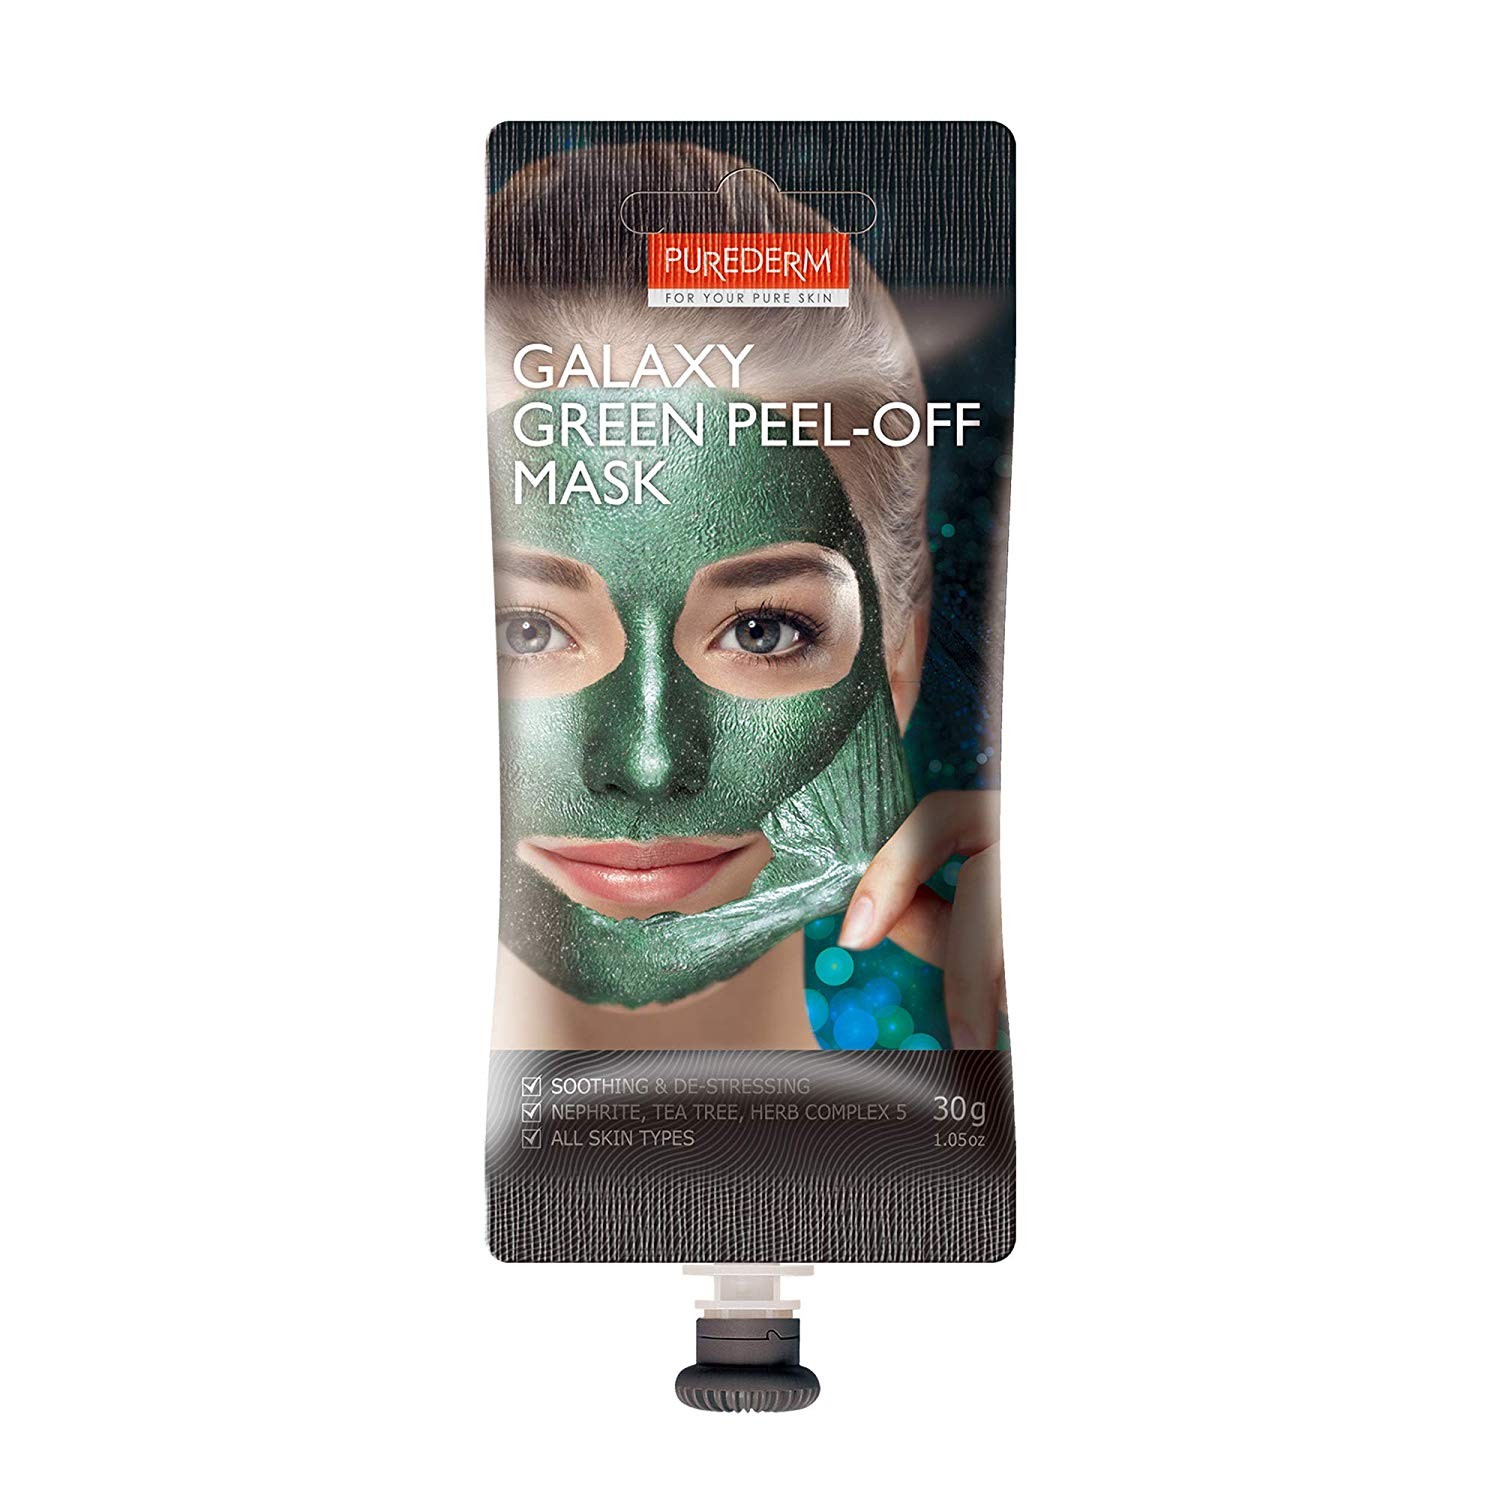 PUREDERM - Galaxy Peel-off Mask Green - Spout - 30g